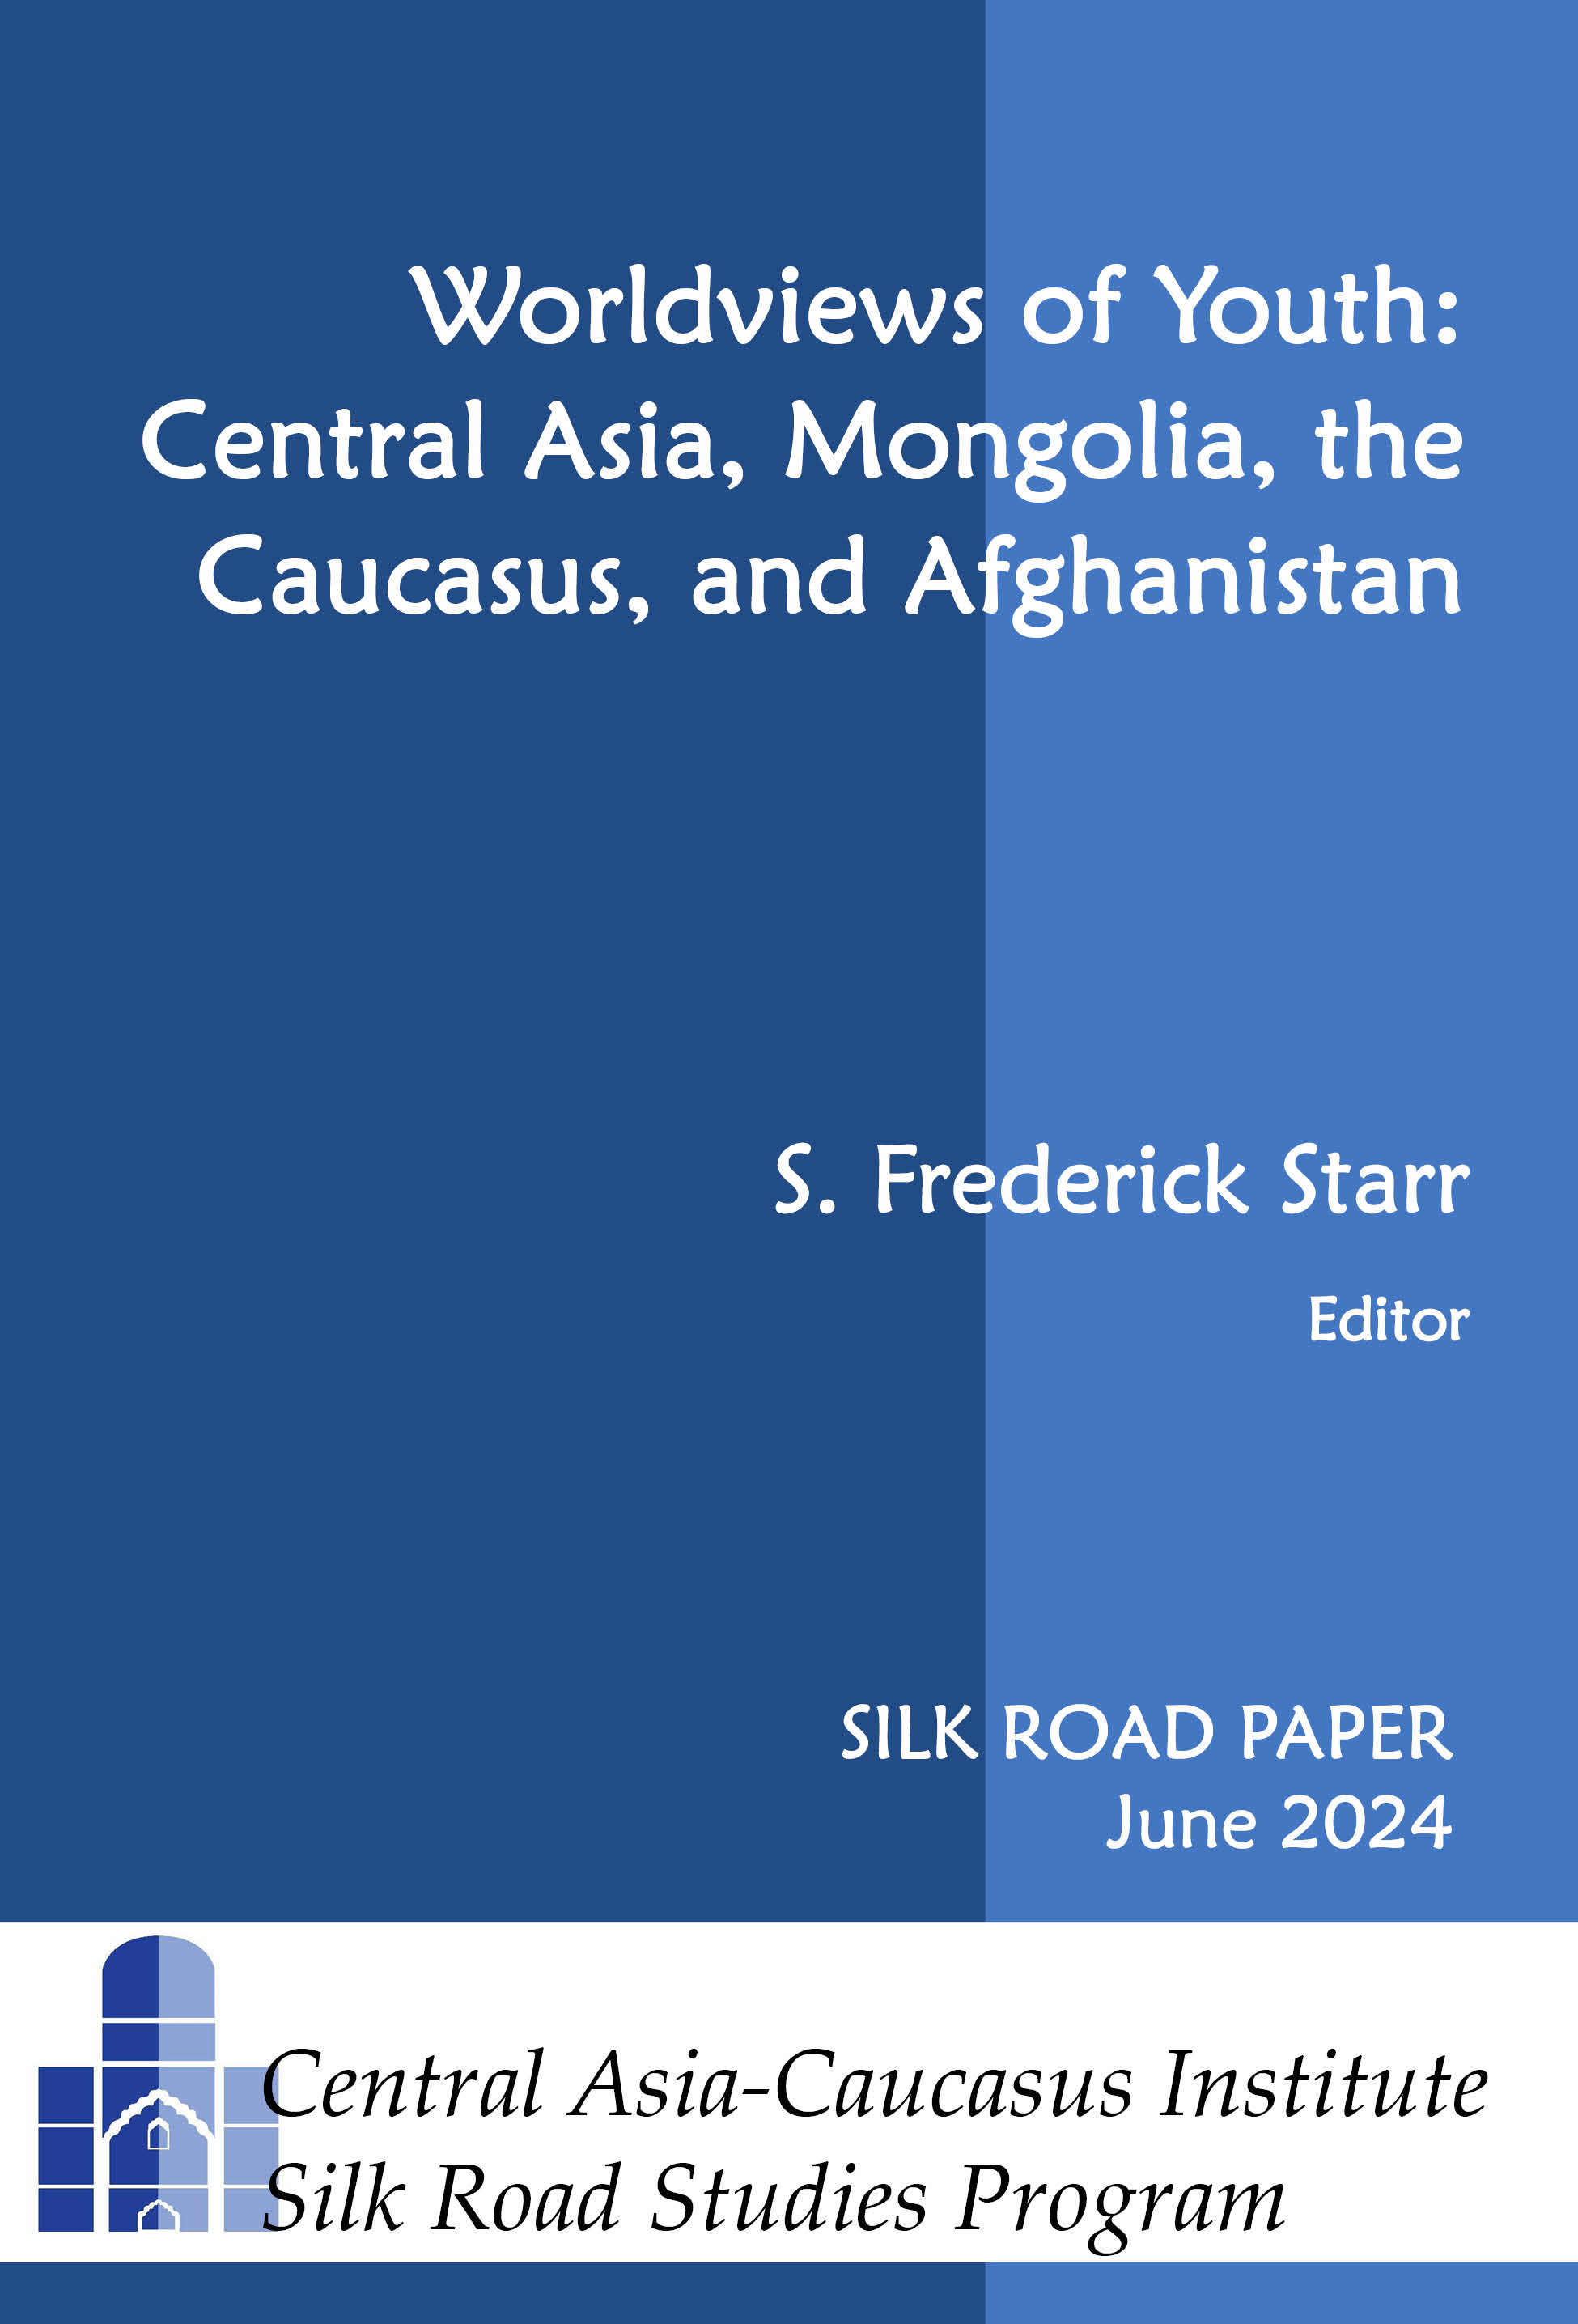 Silk Road Paper cover7 1